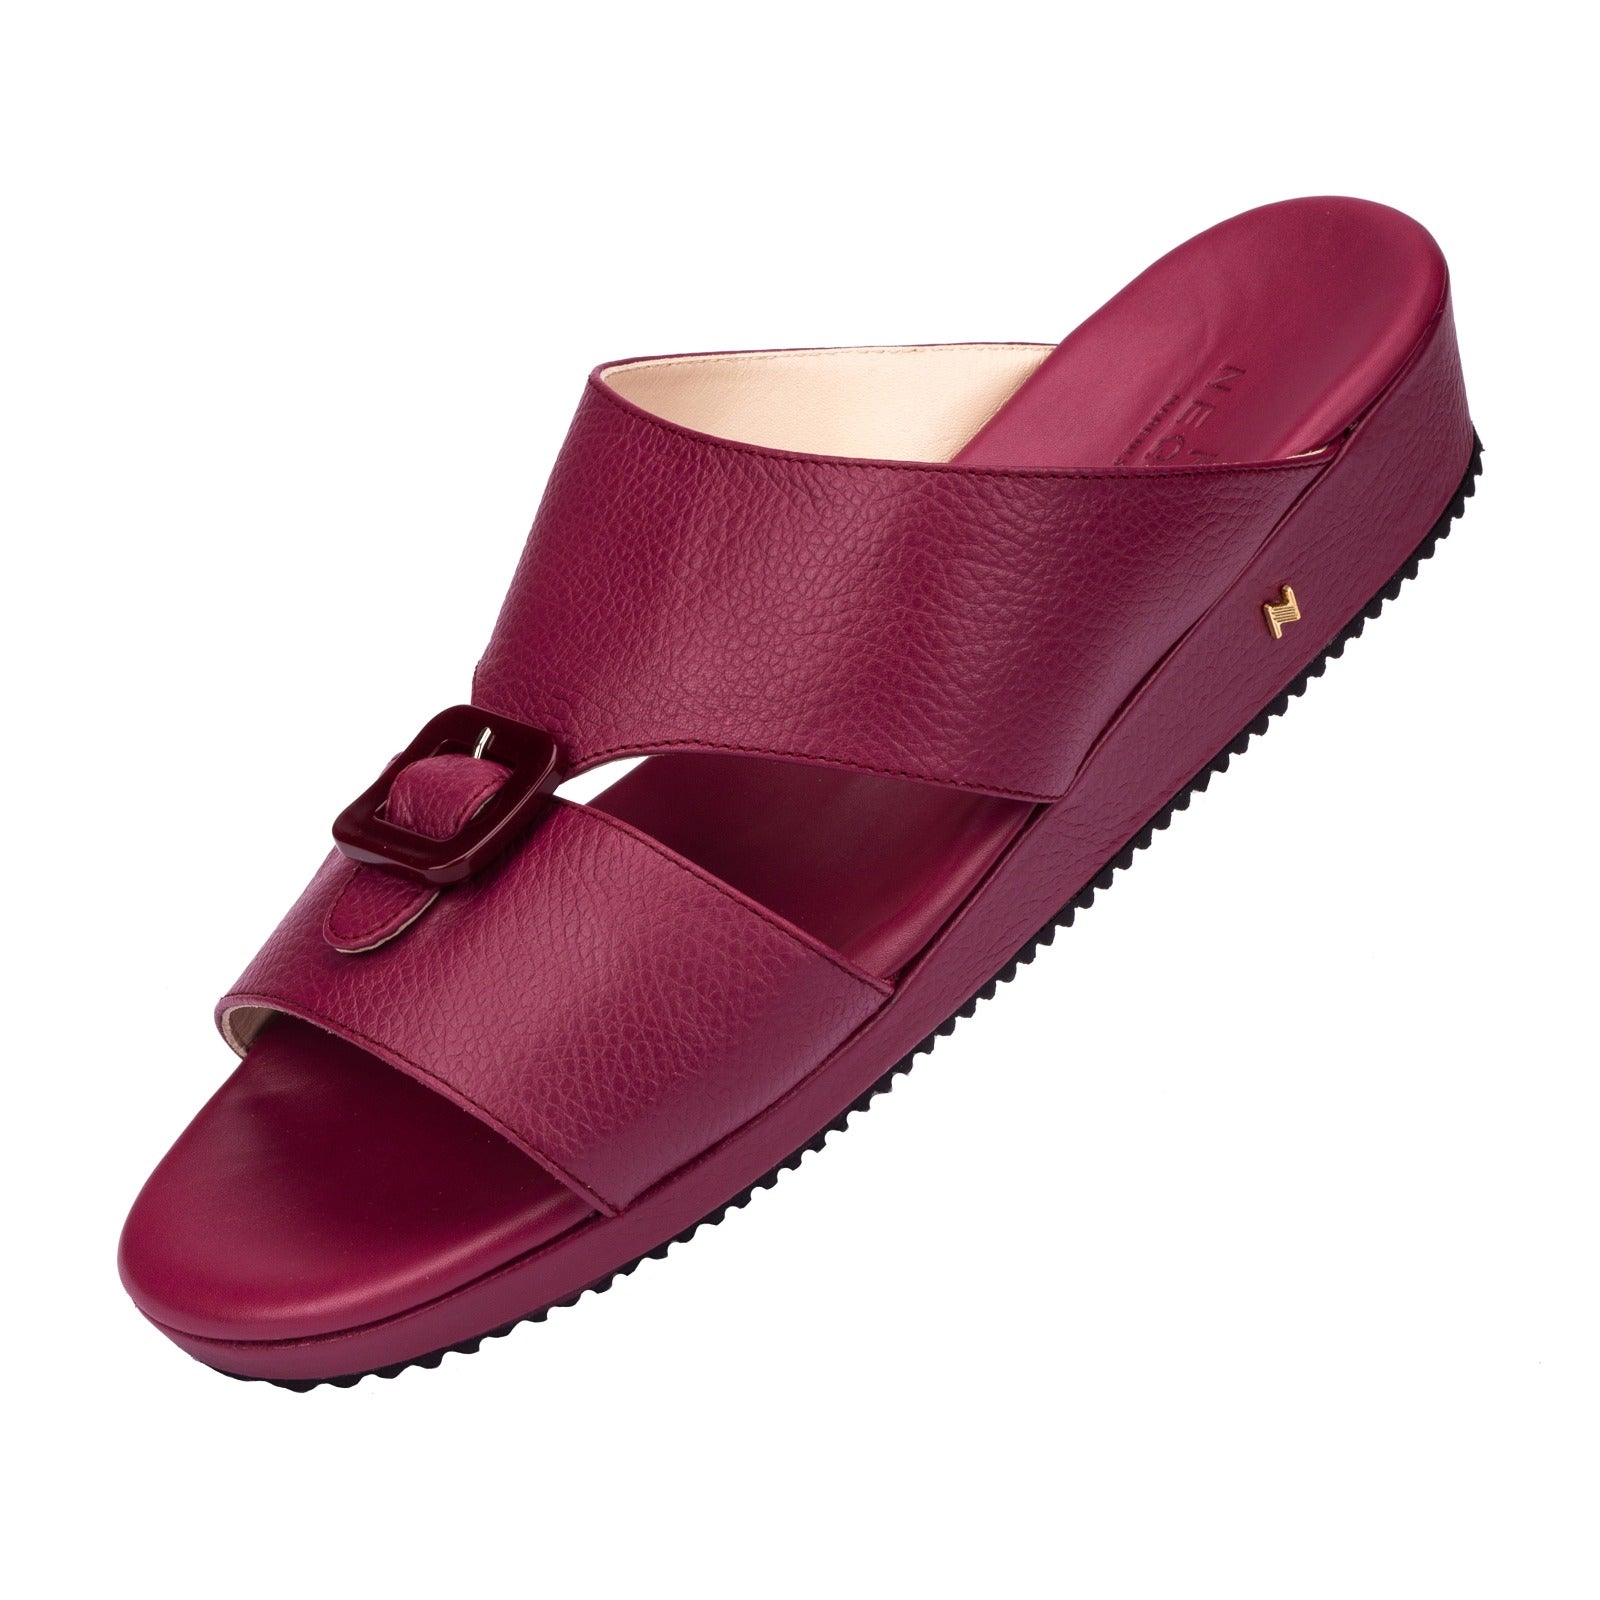 Neqwa CÓRDOBA Jute Collection Sandals - Burgundy Red Calfskin Leather